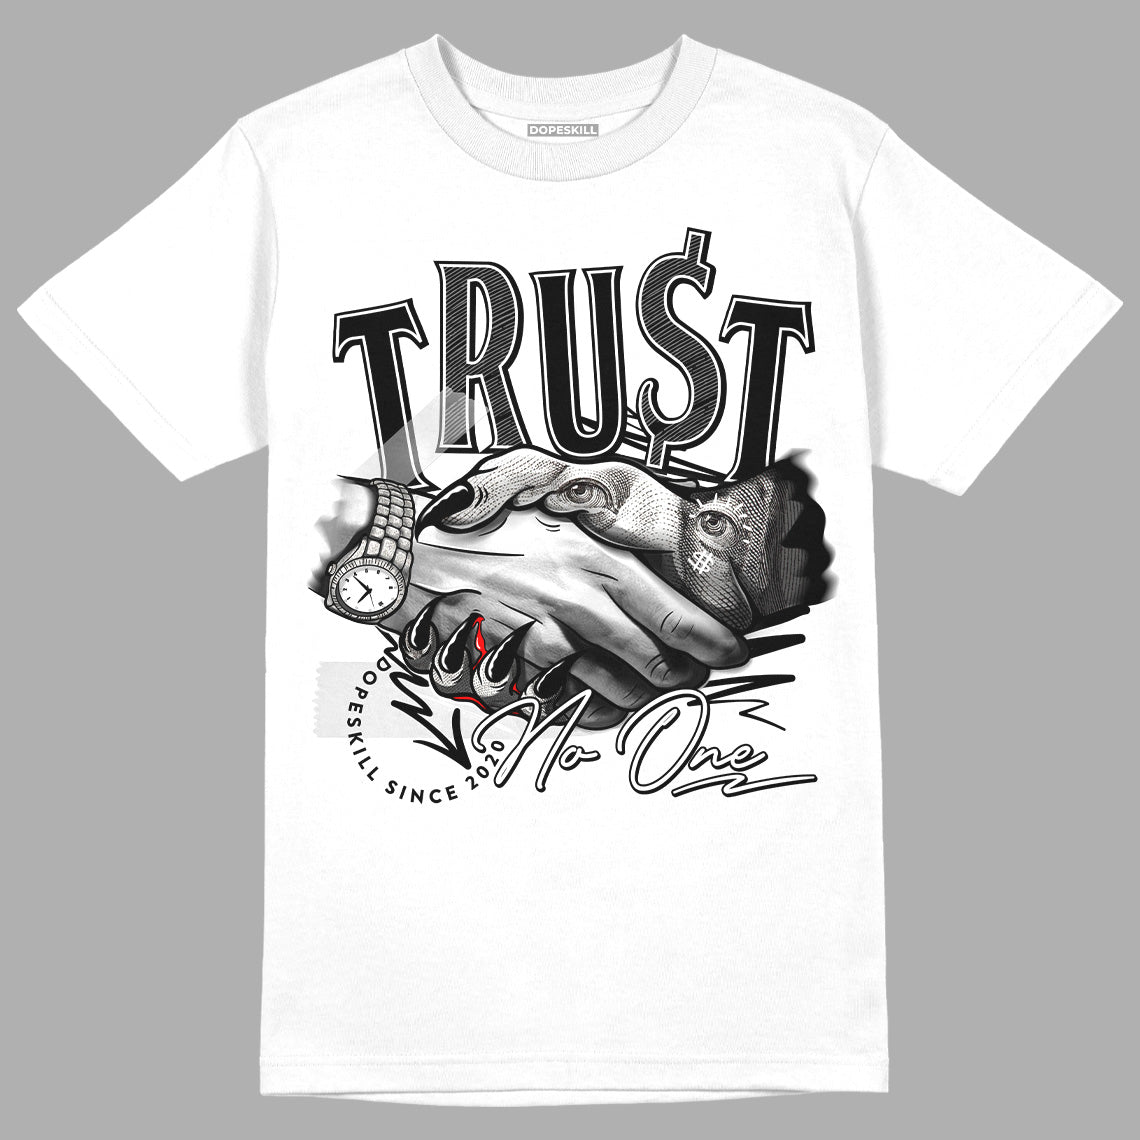 Dunk Low Panda White Black DopeSkill T-Shirt Trust No One Graphic Streetwear - White 